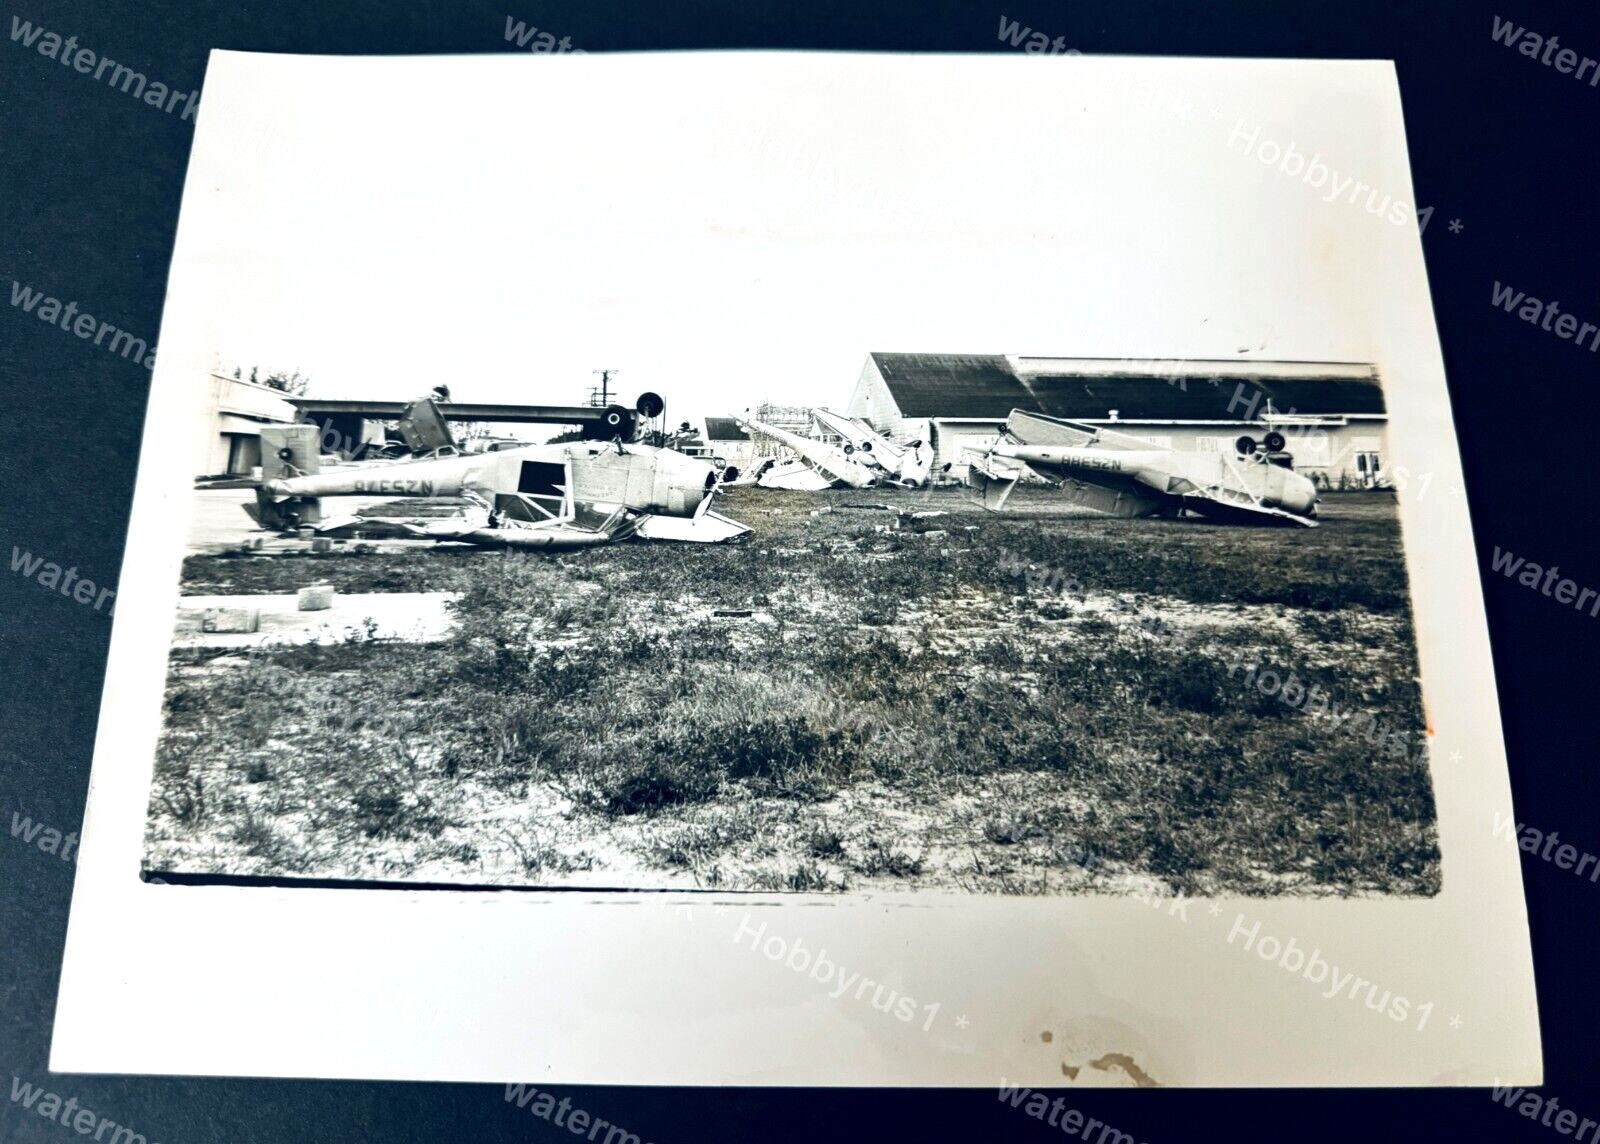 Miami Hurricane Cleo Airplane Disasters Opa Locka Airport 1964 Orig Press Photo